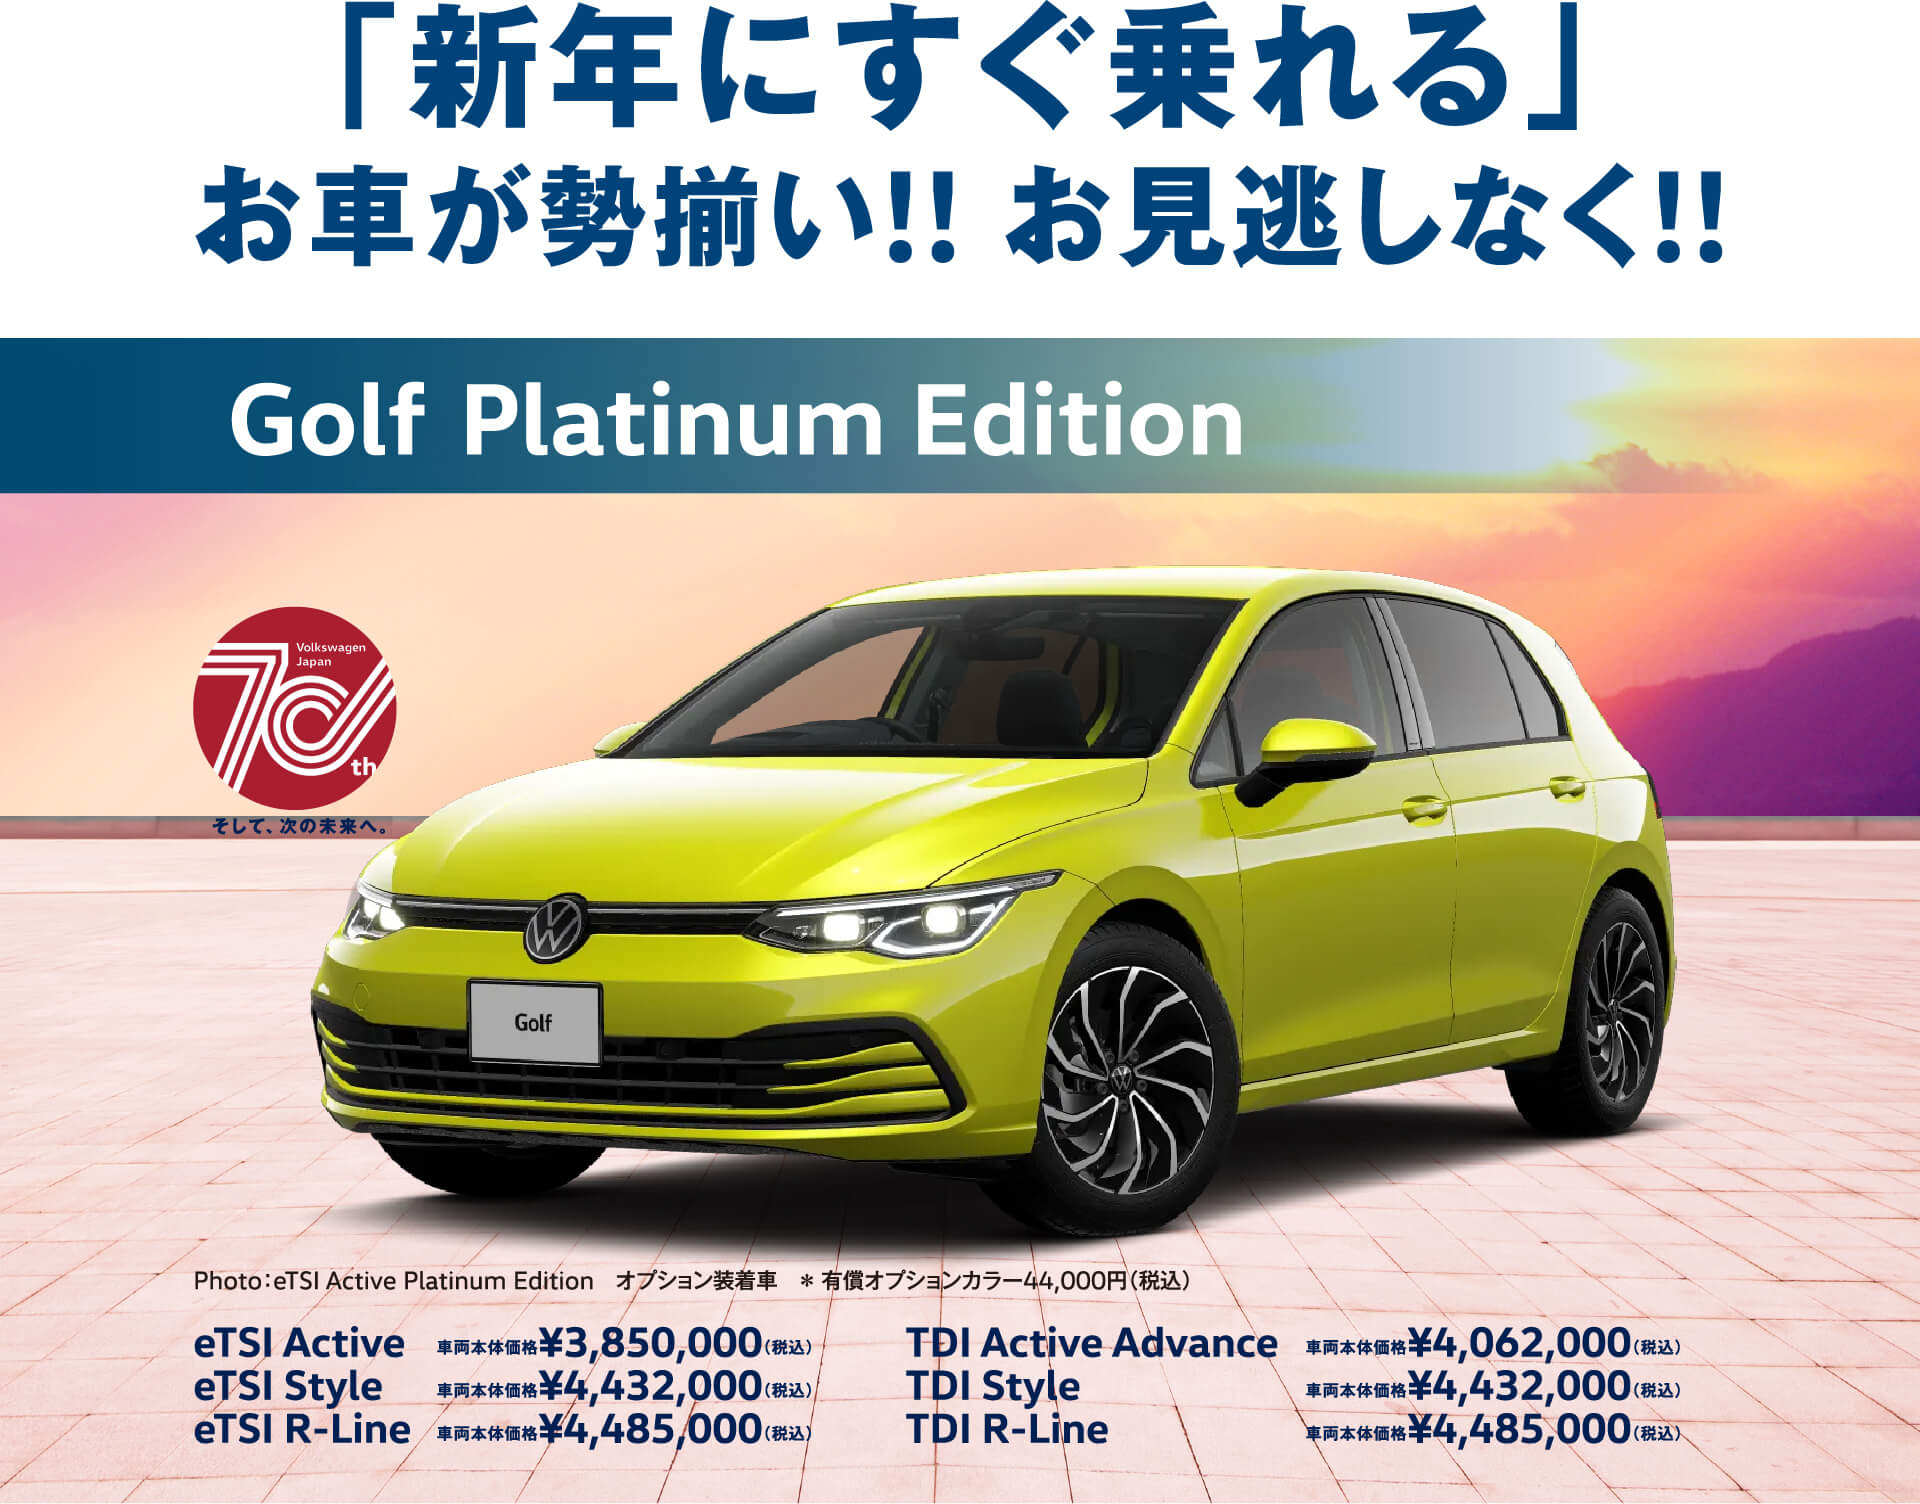 Golf Platinum Edition